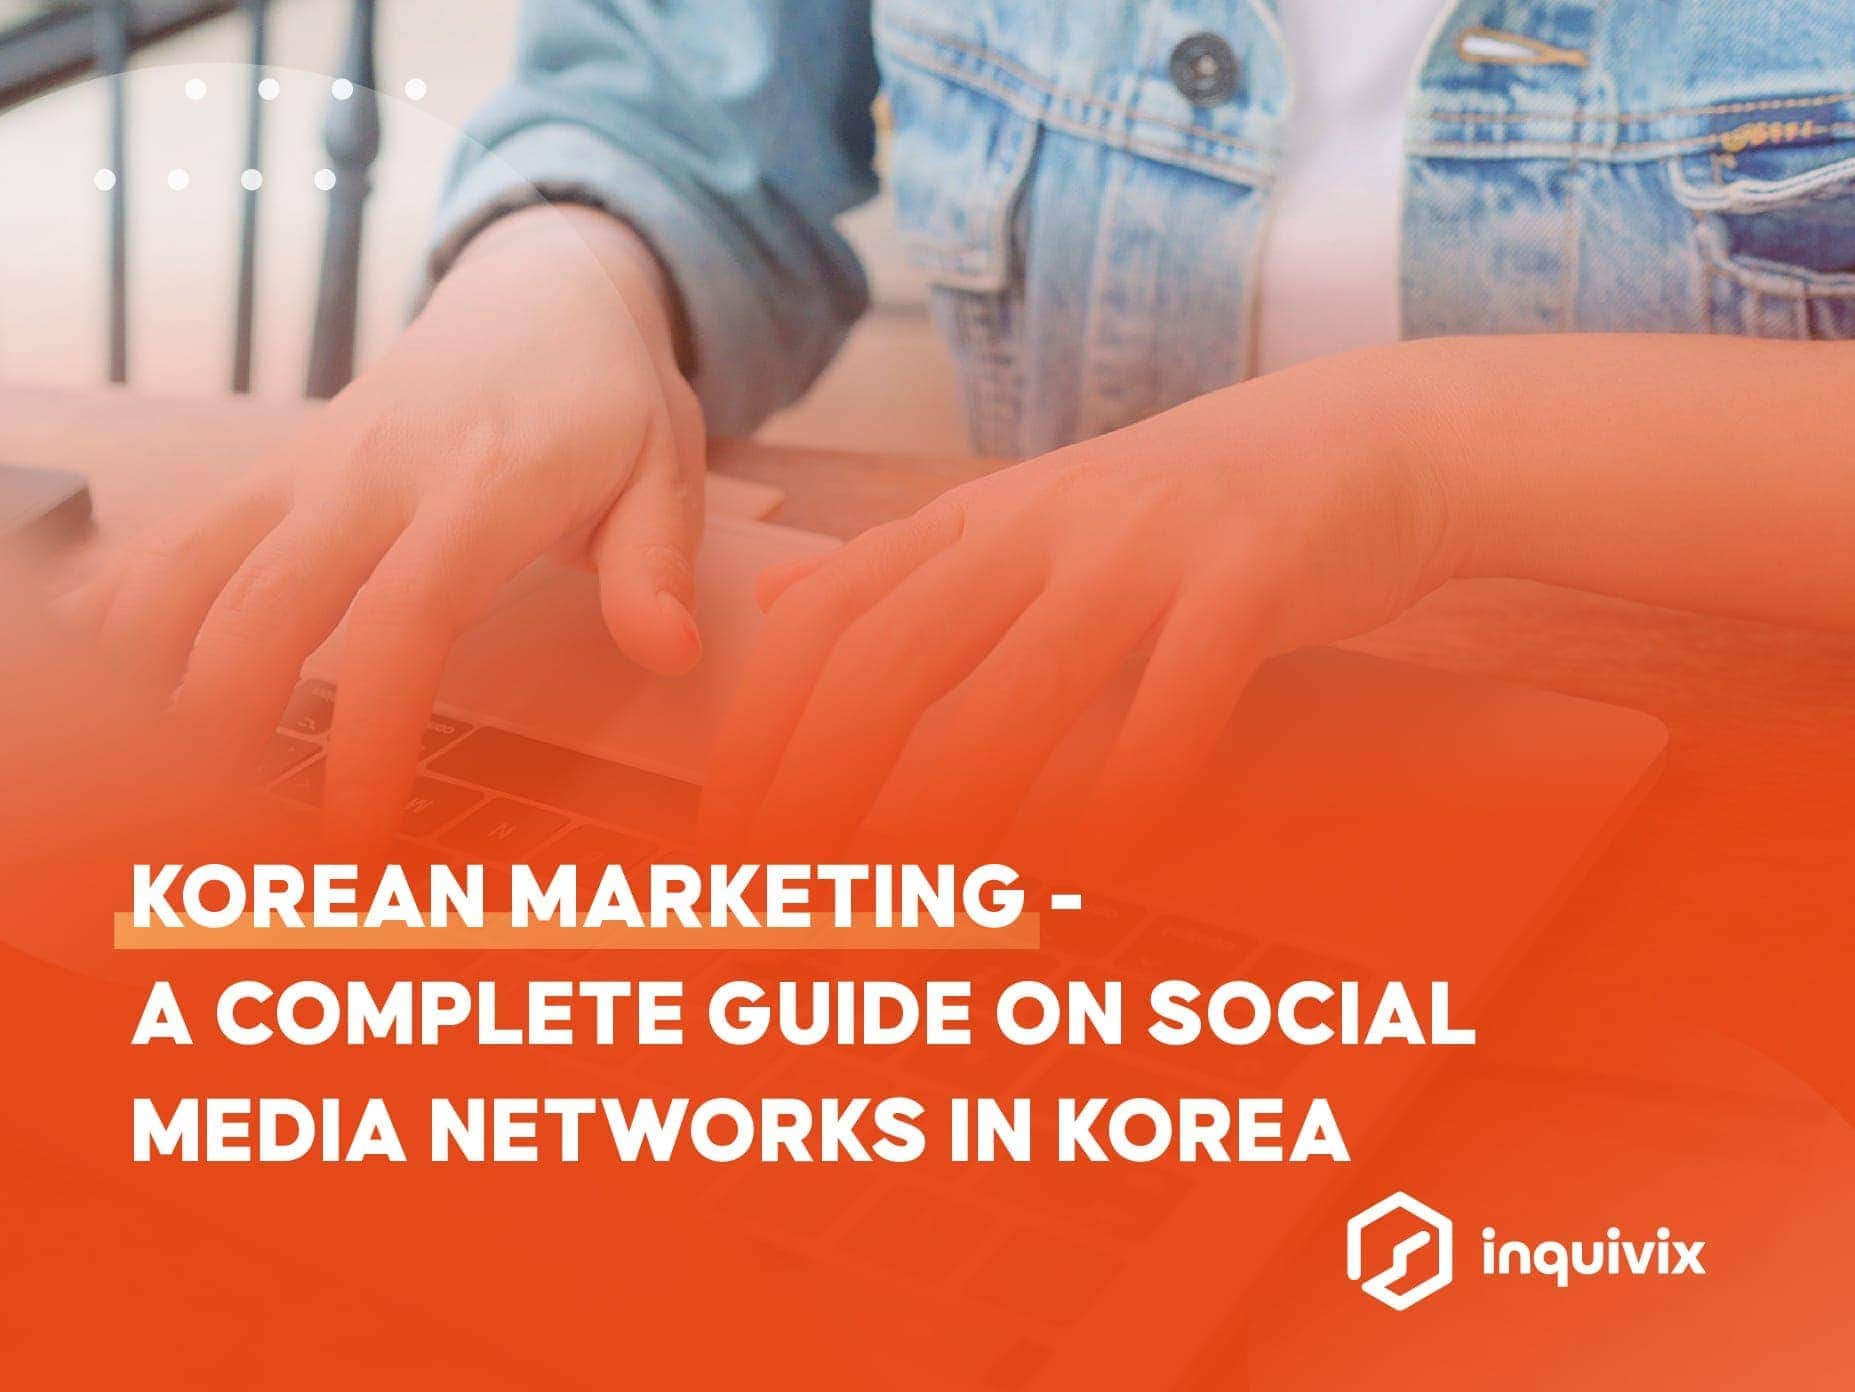 Korean marketing - a complete guide on social media networks in Korea